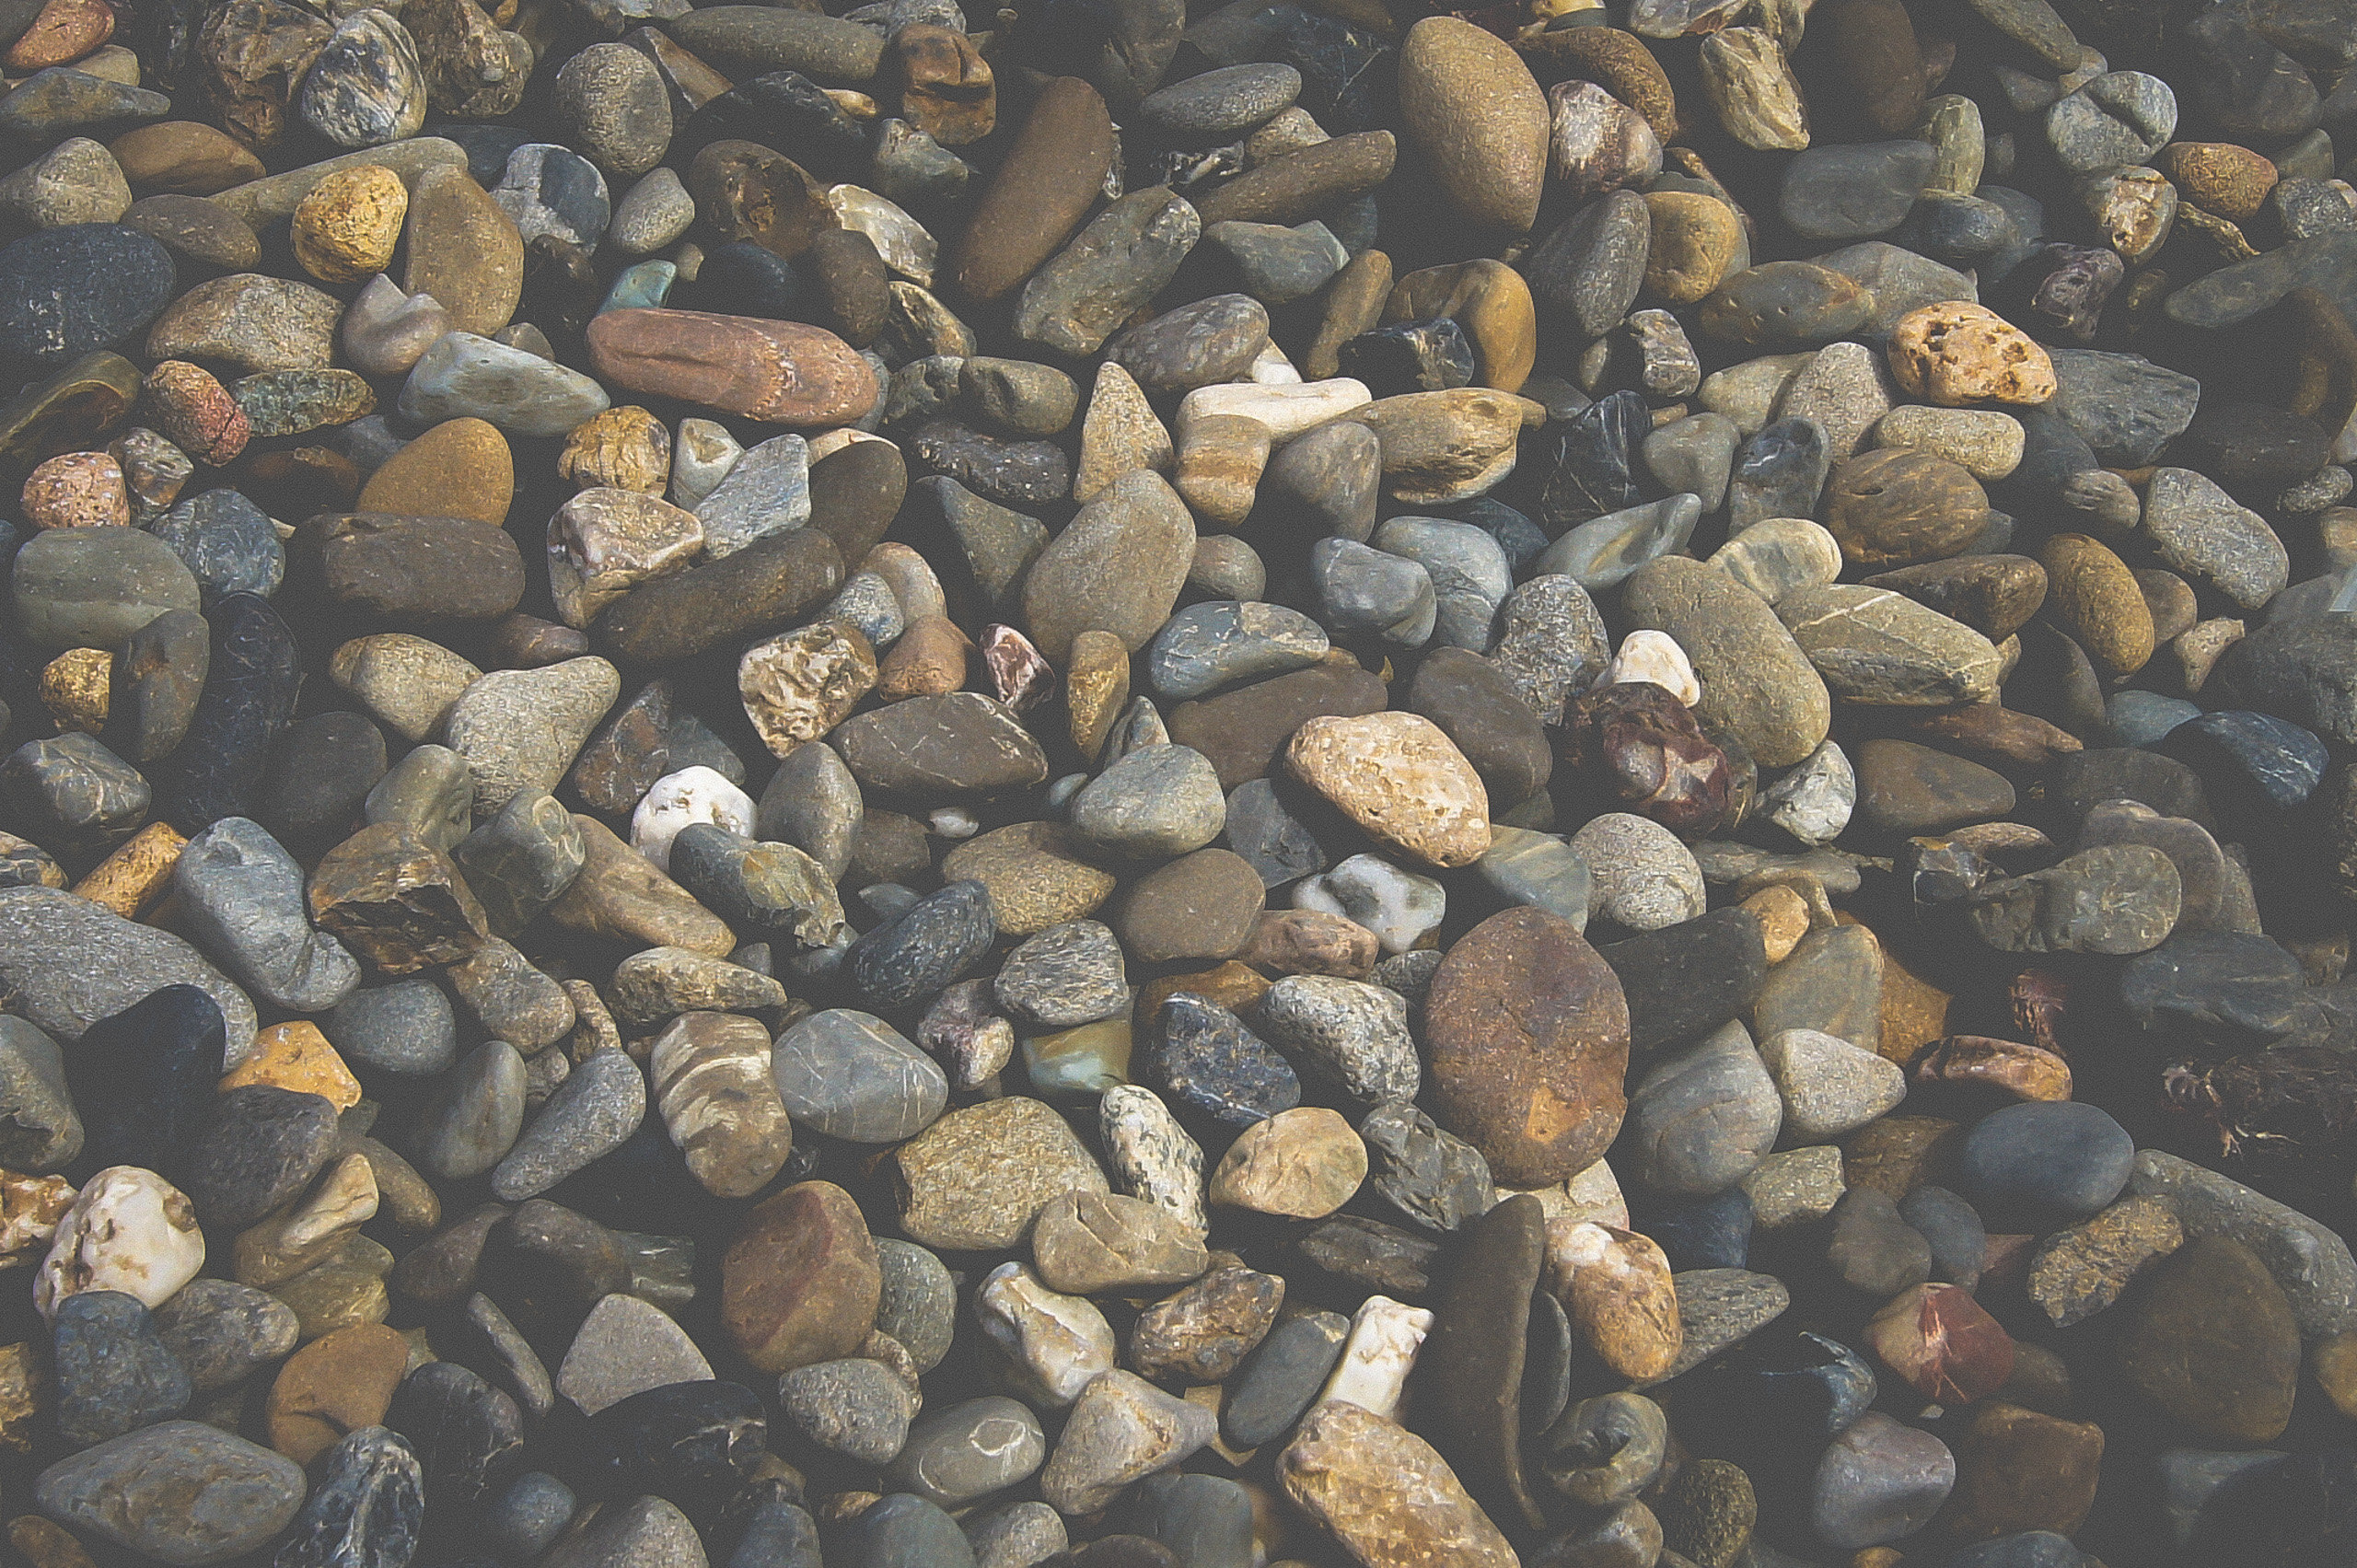 Grey River Pebble 20mm Closeup Landscape Supply Photography